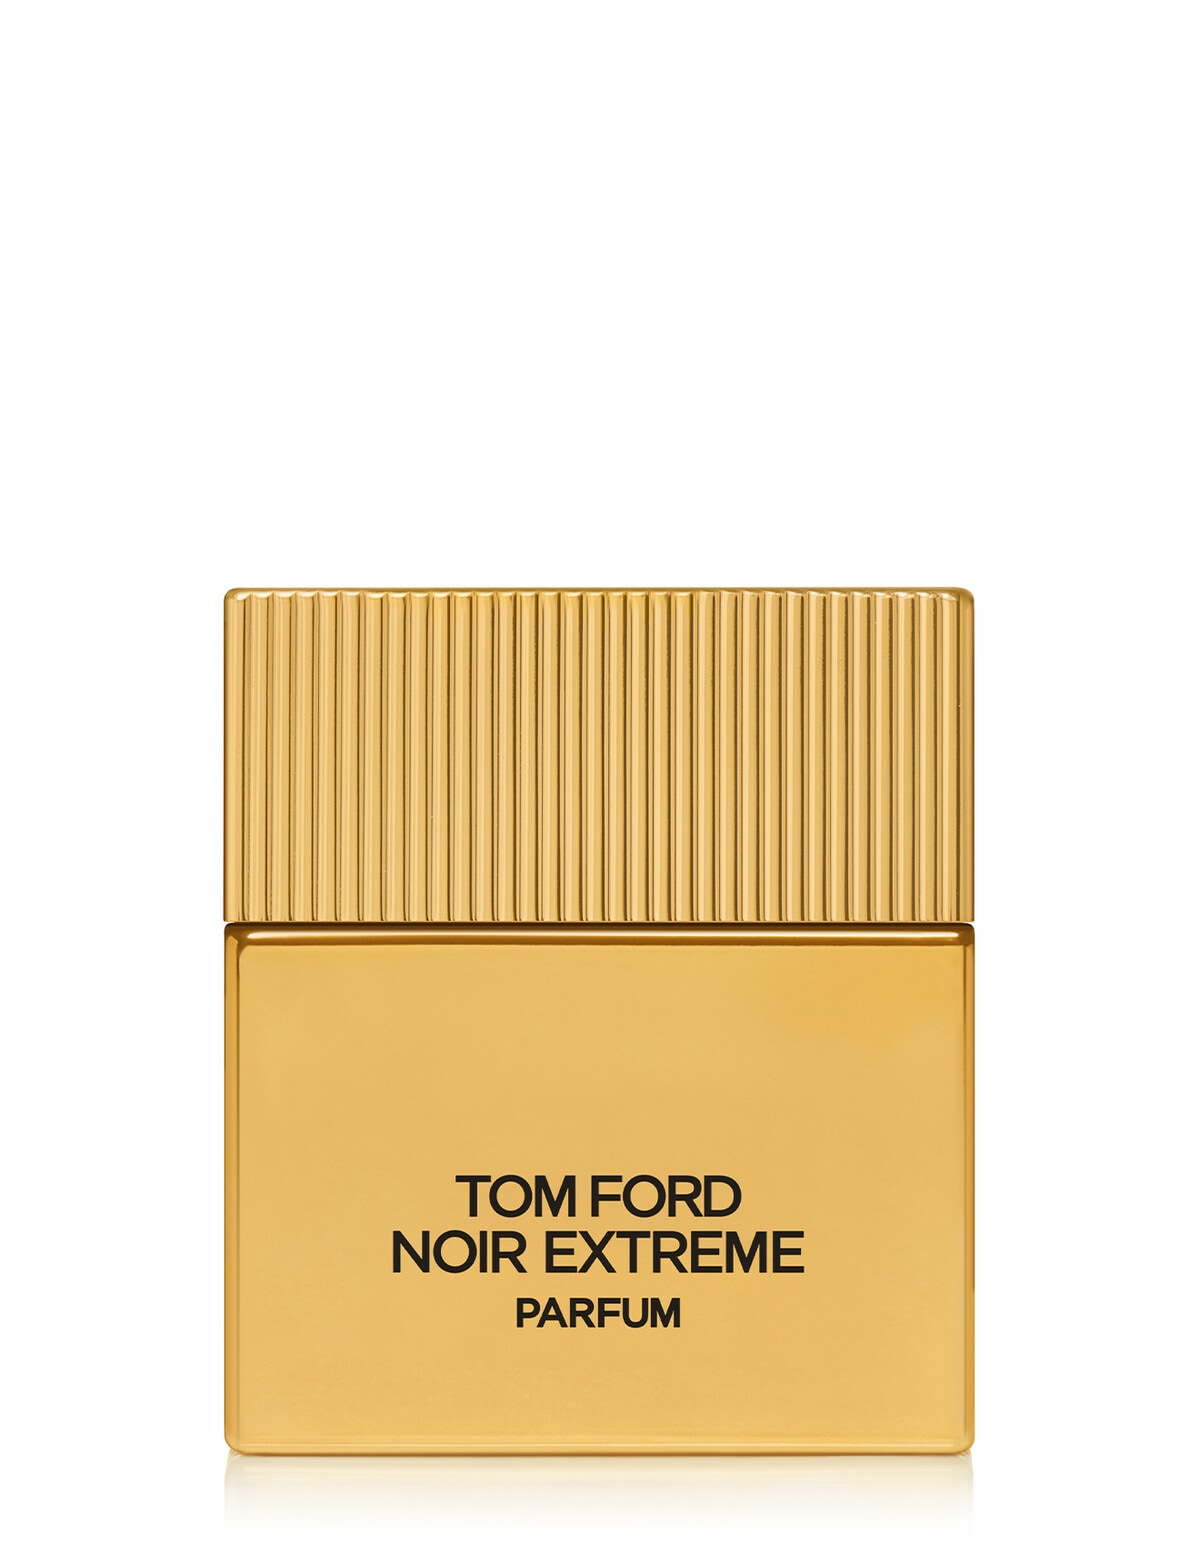 Tom Ford Noir Extreme Parfum - Women's Perfumes